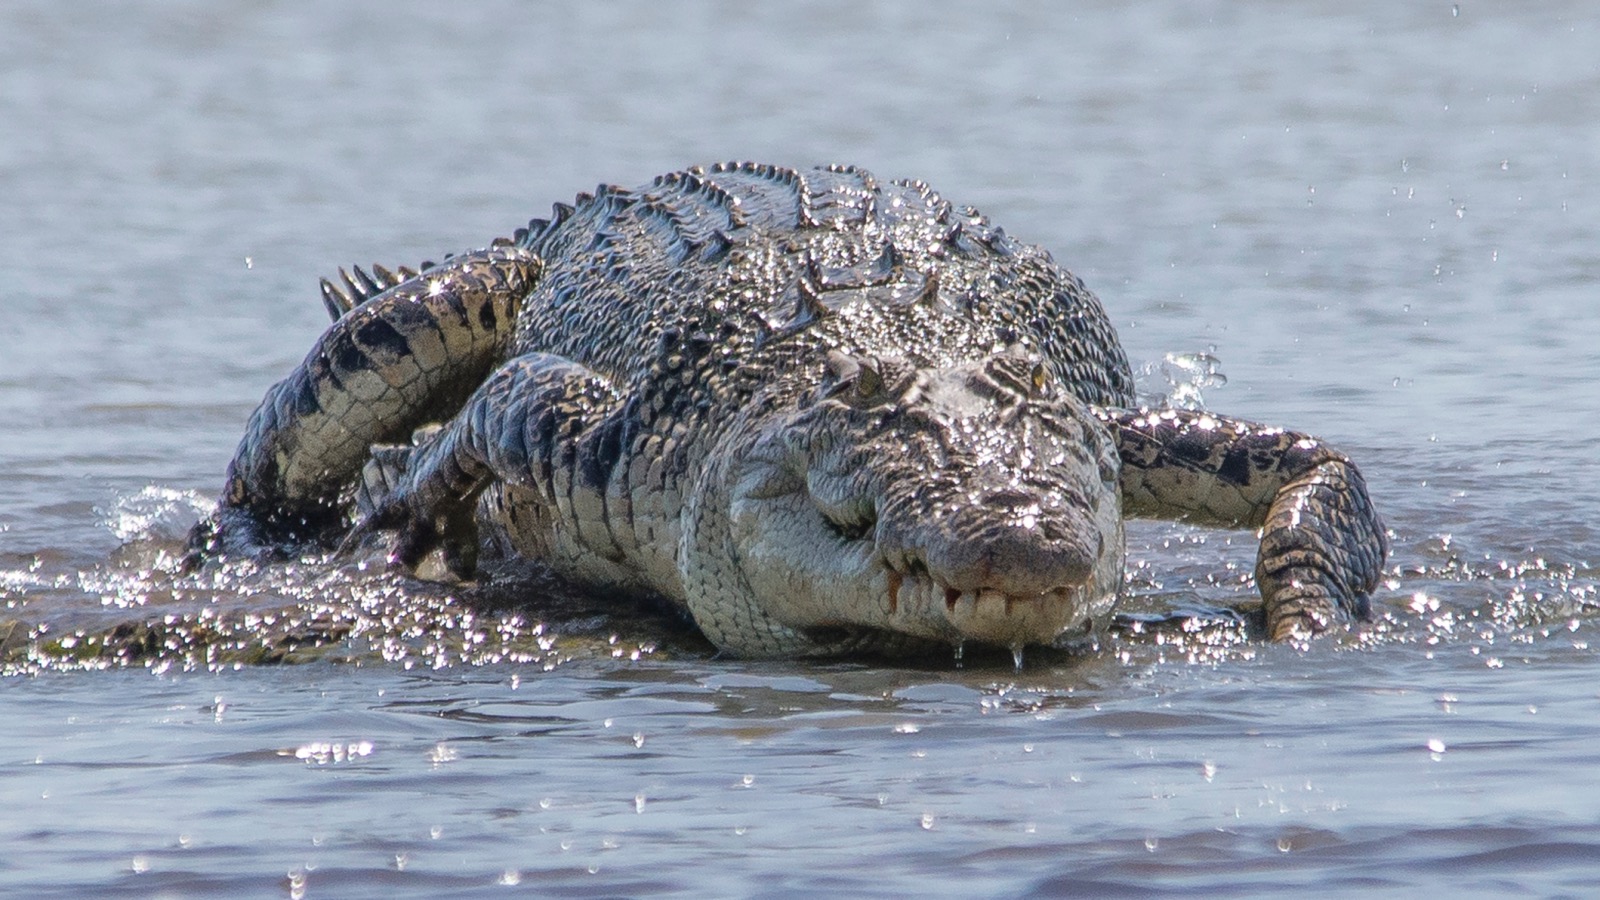 saltwater crocodile in Australia's Northern Territory